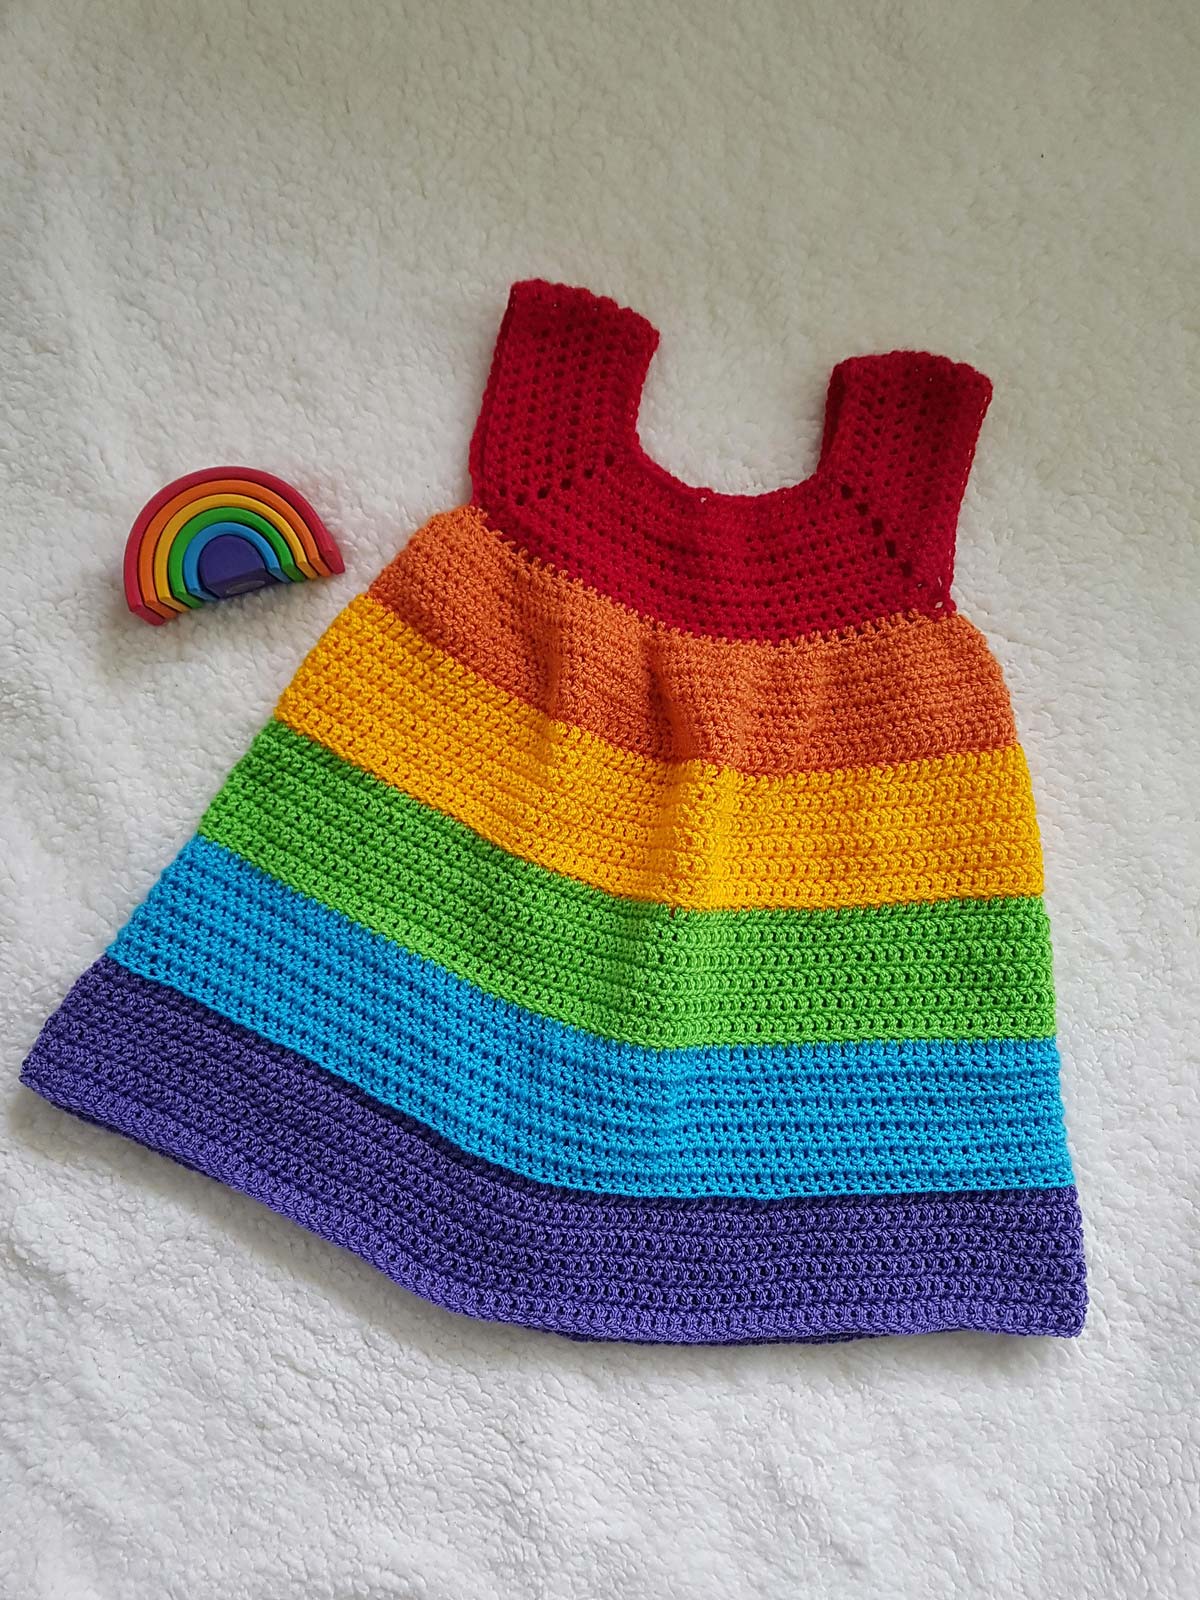 Crochet rainbow dress pattern